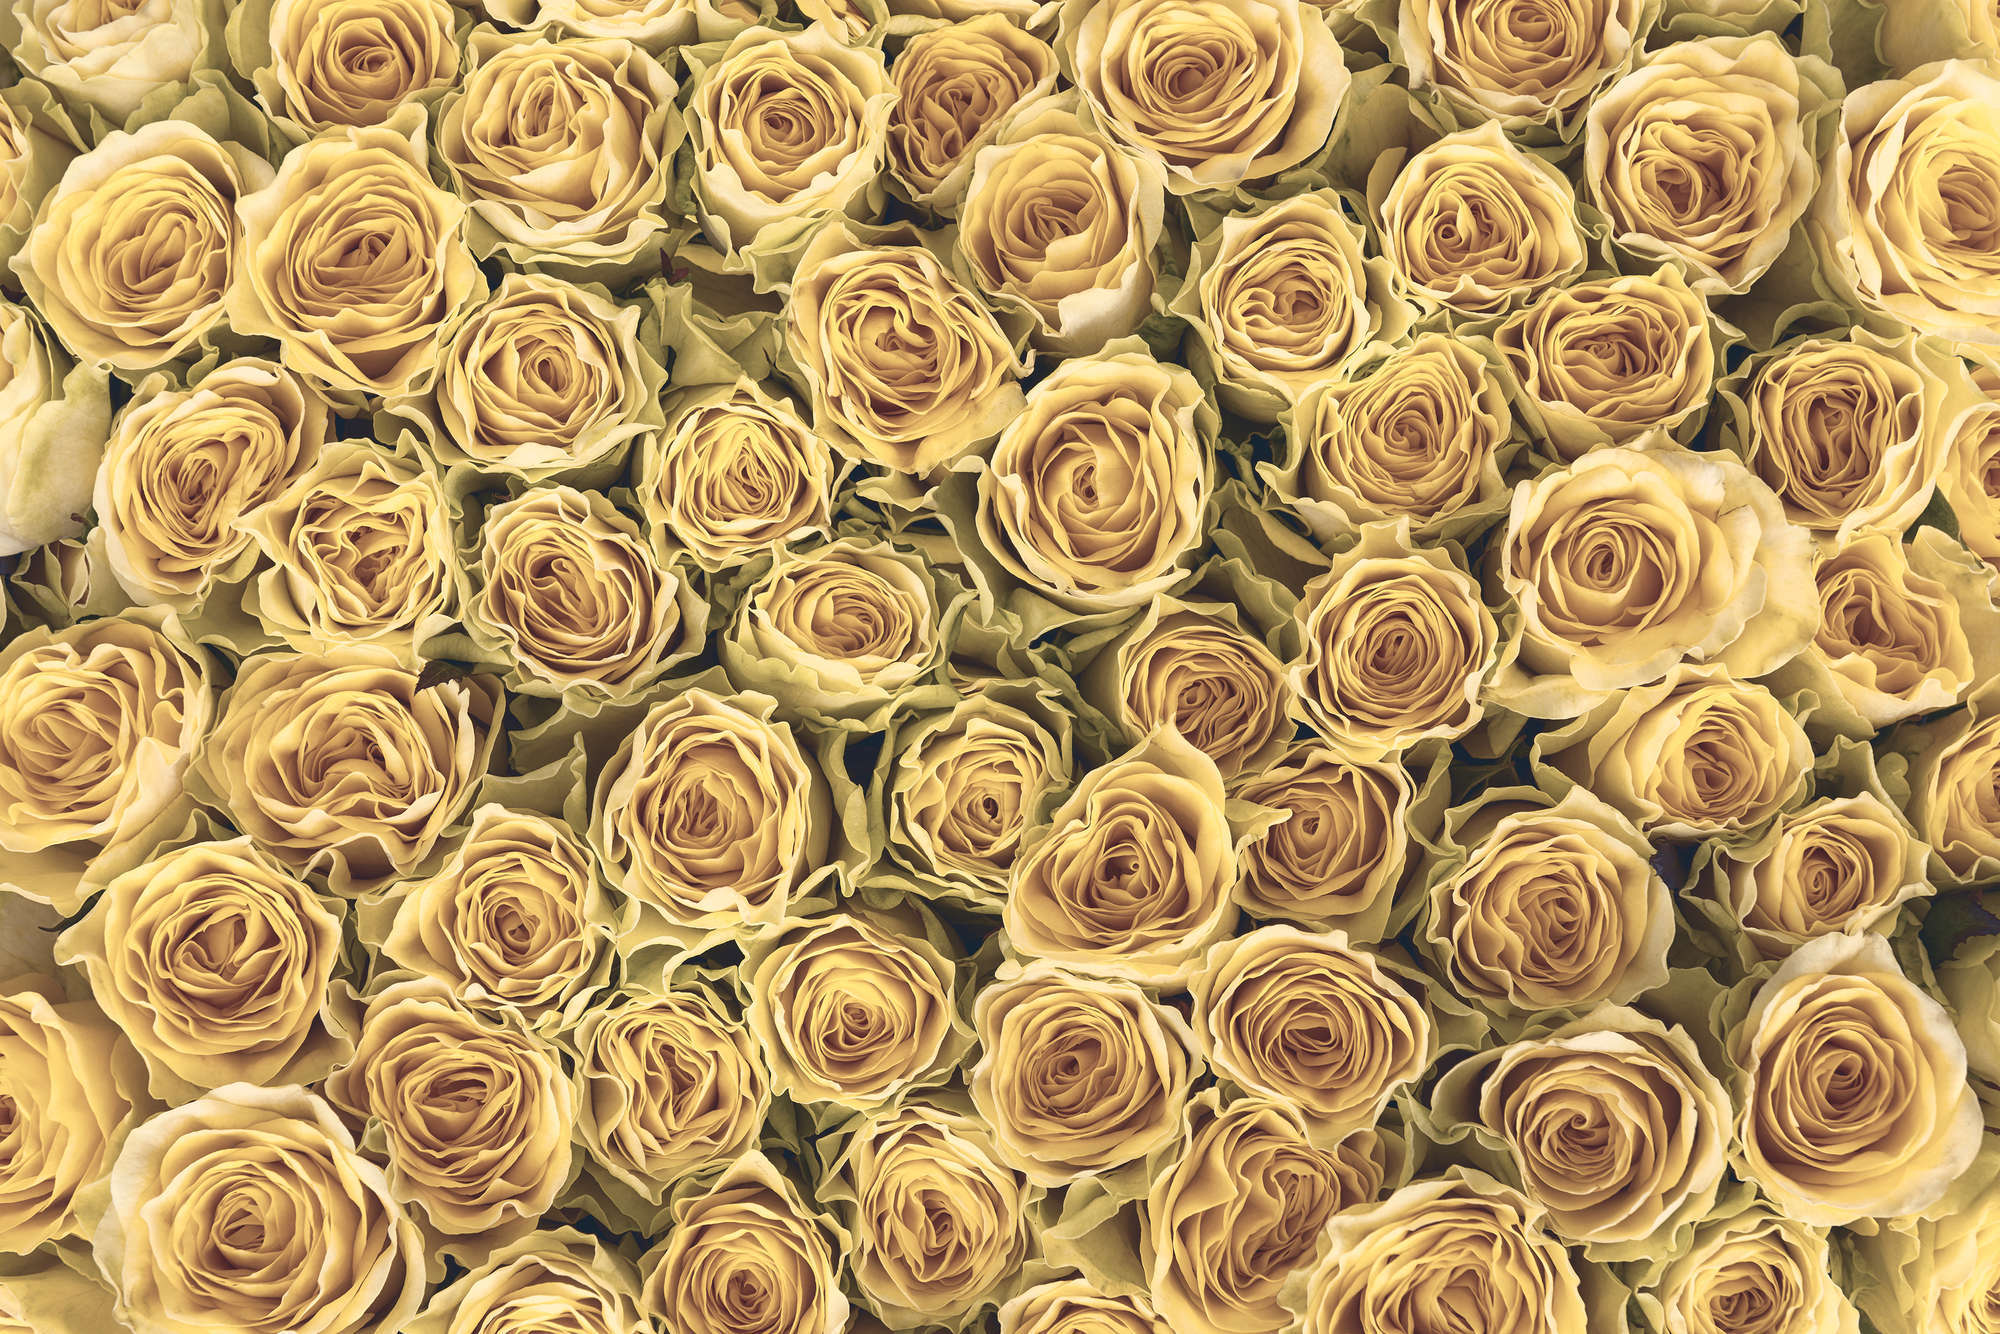             Plants mural golden roses on matt smooth non-woven
        